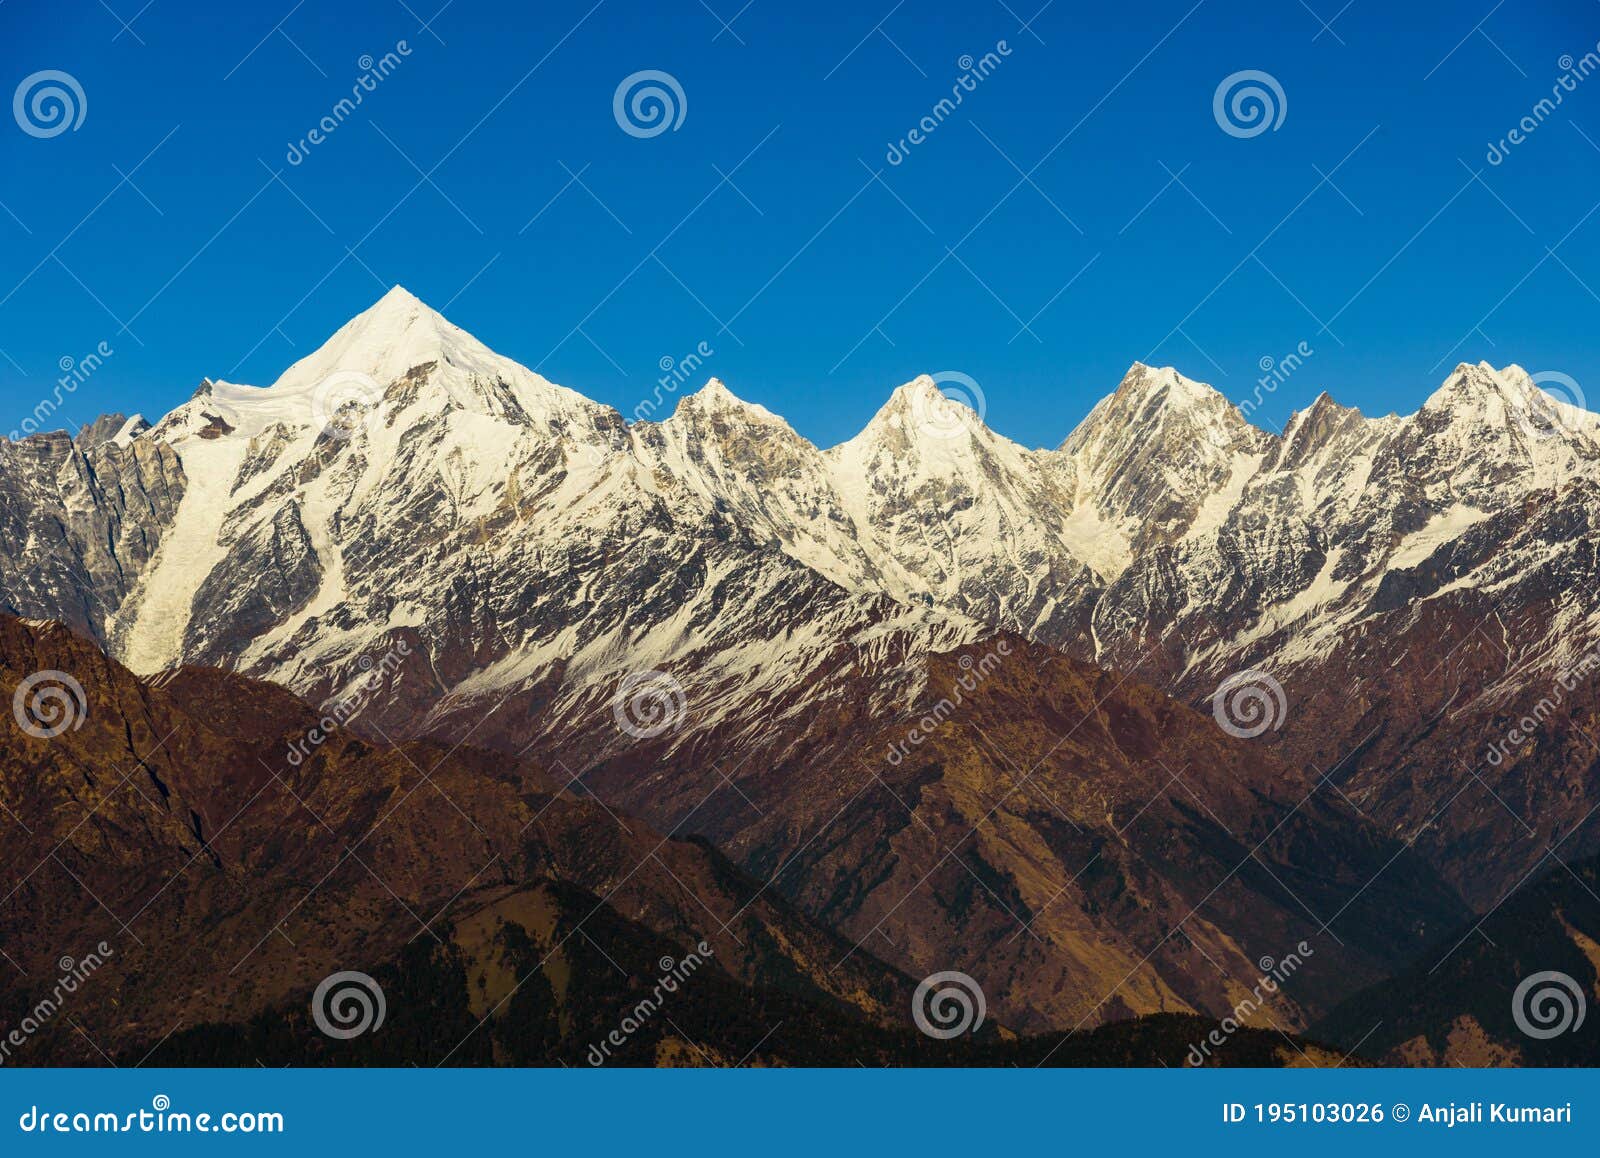 panchchuli peaks, munsiyari